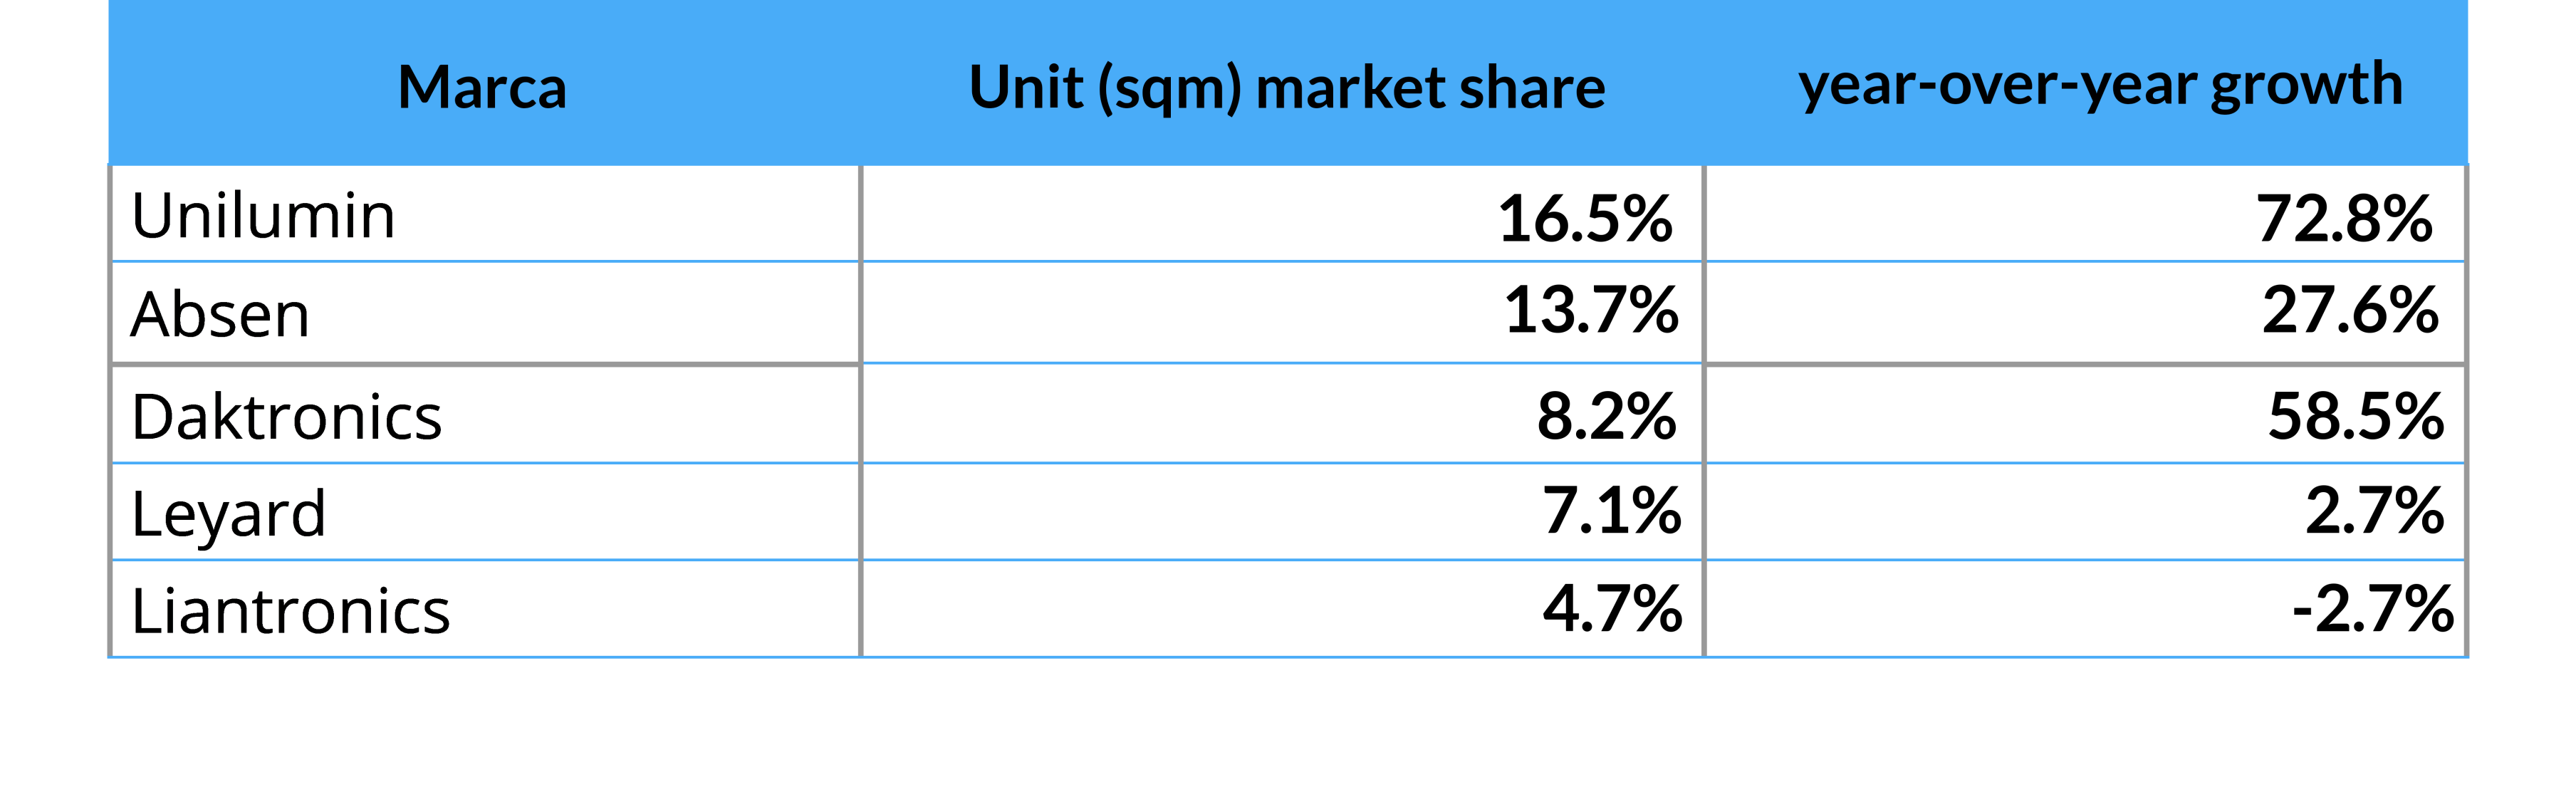 global unit market share for led-ept